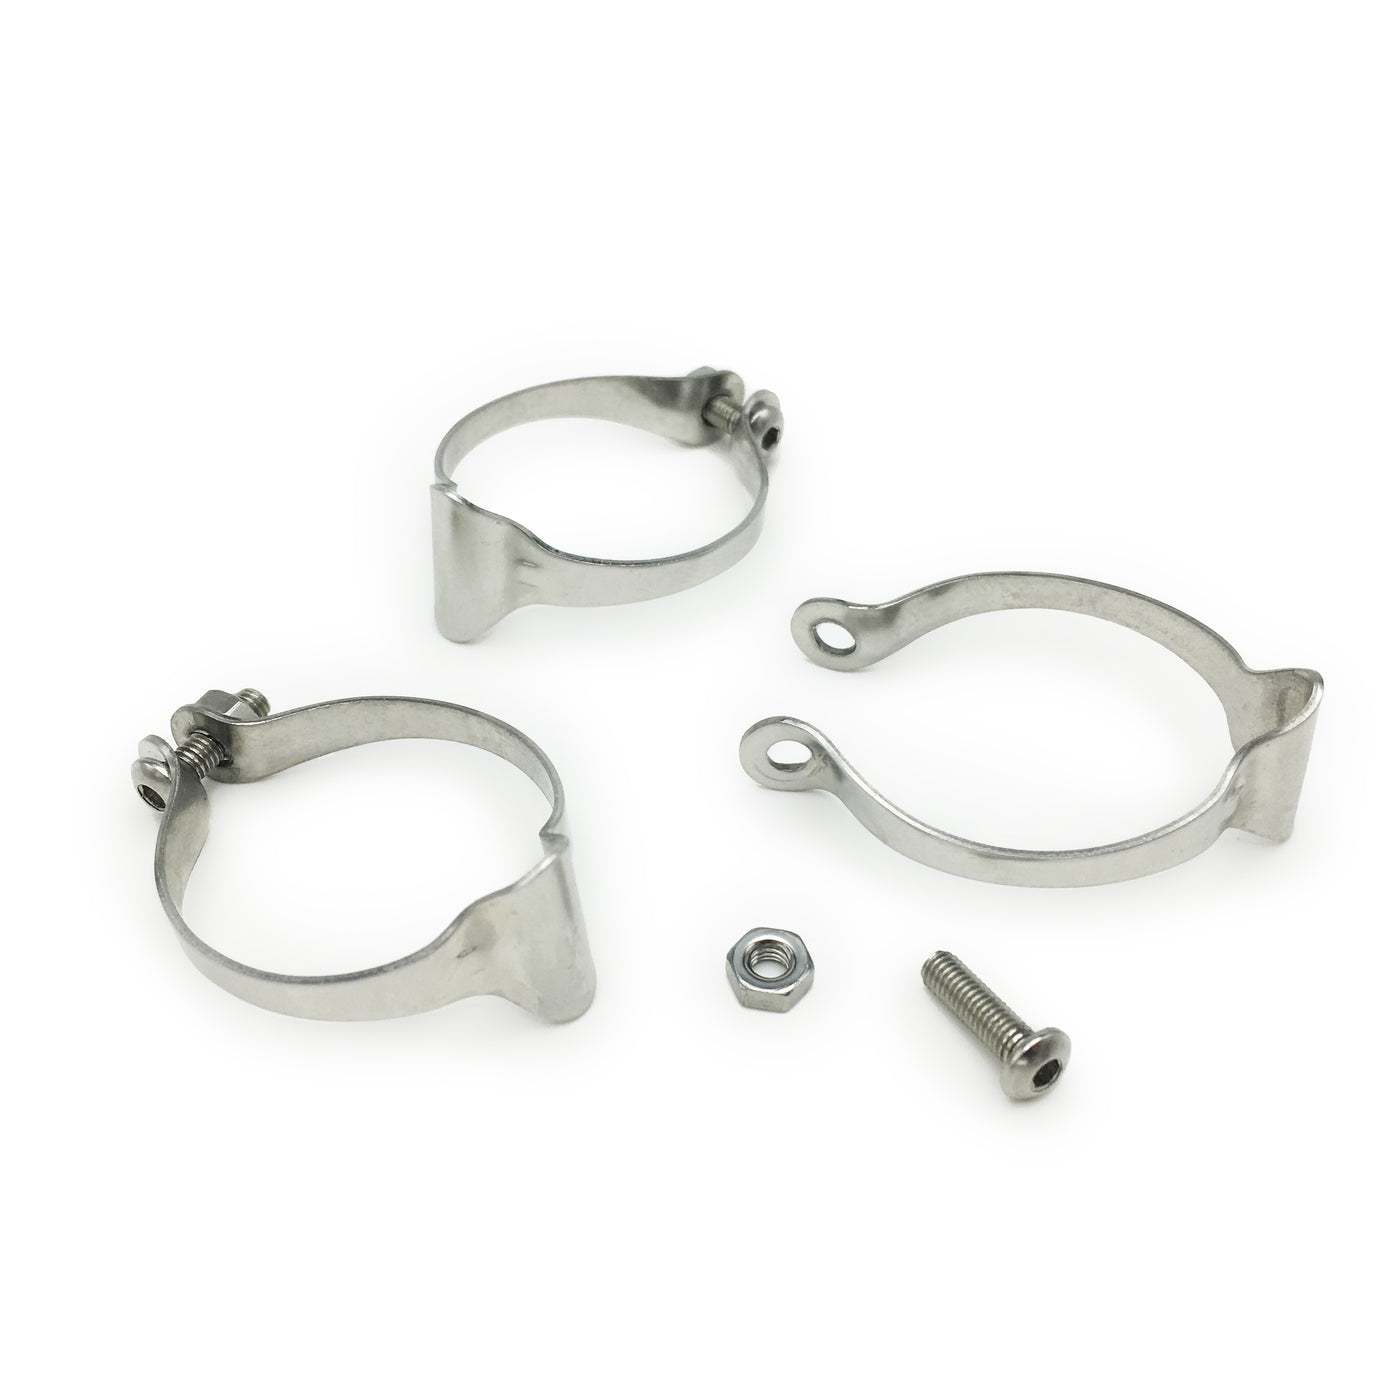 Stainless steel housing clips for 1-1/8" tube - 3-pack